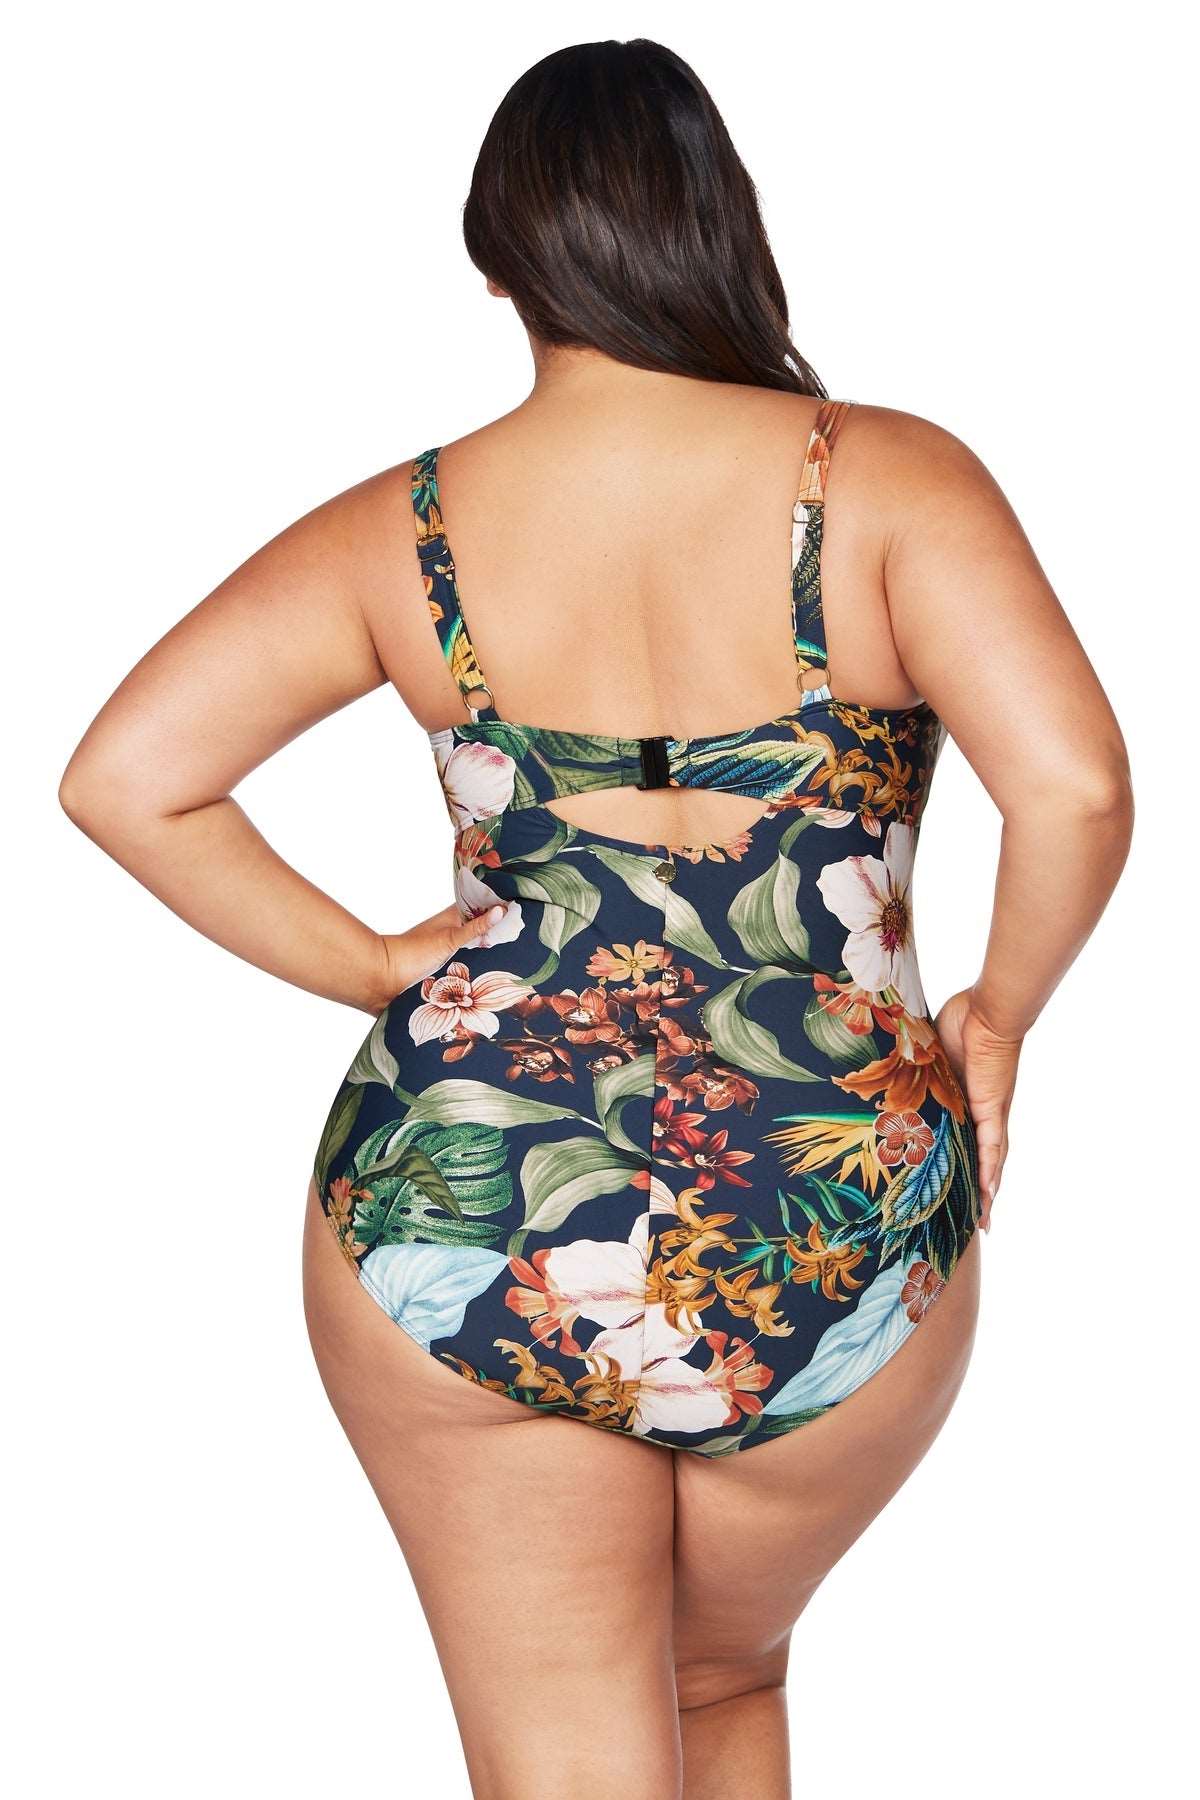 Artesands Plus Size Cezanne One-Piece Swimsuit